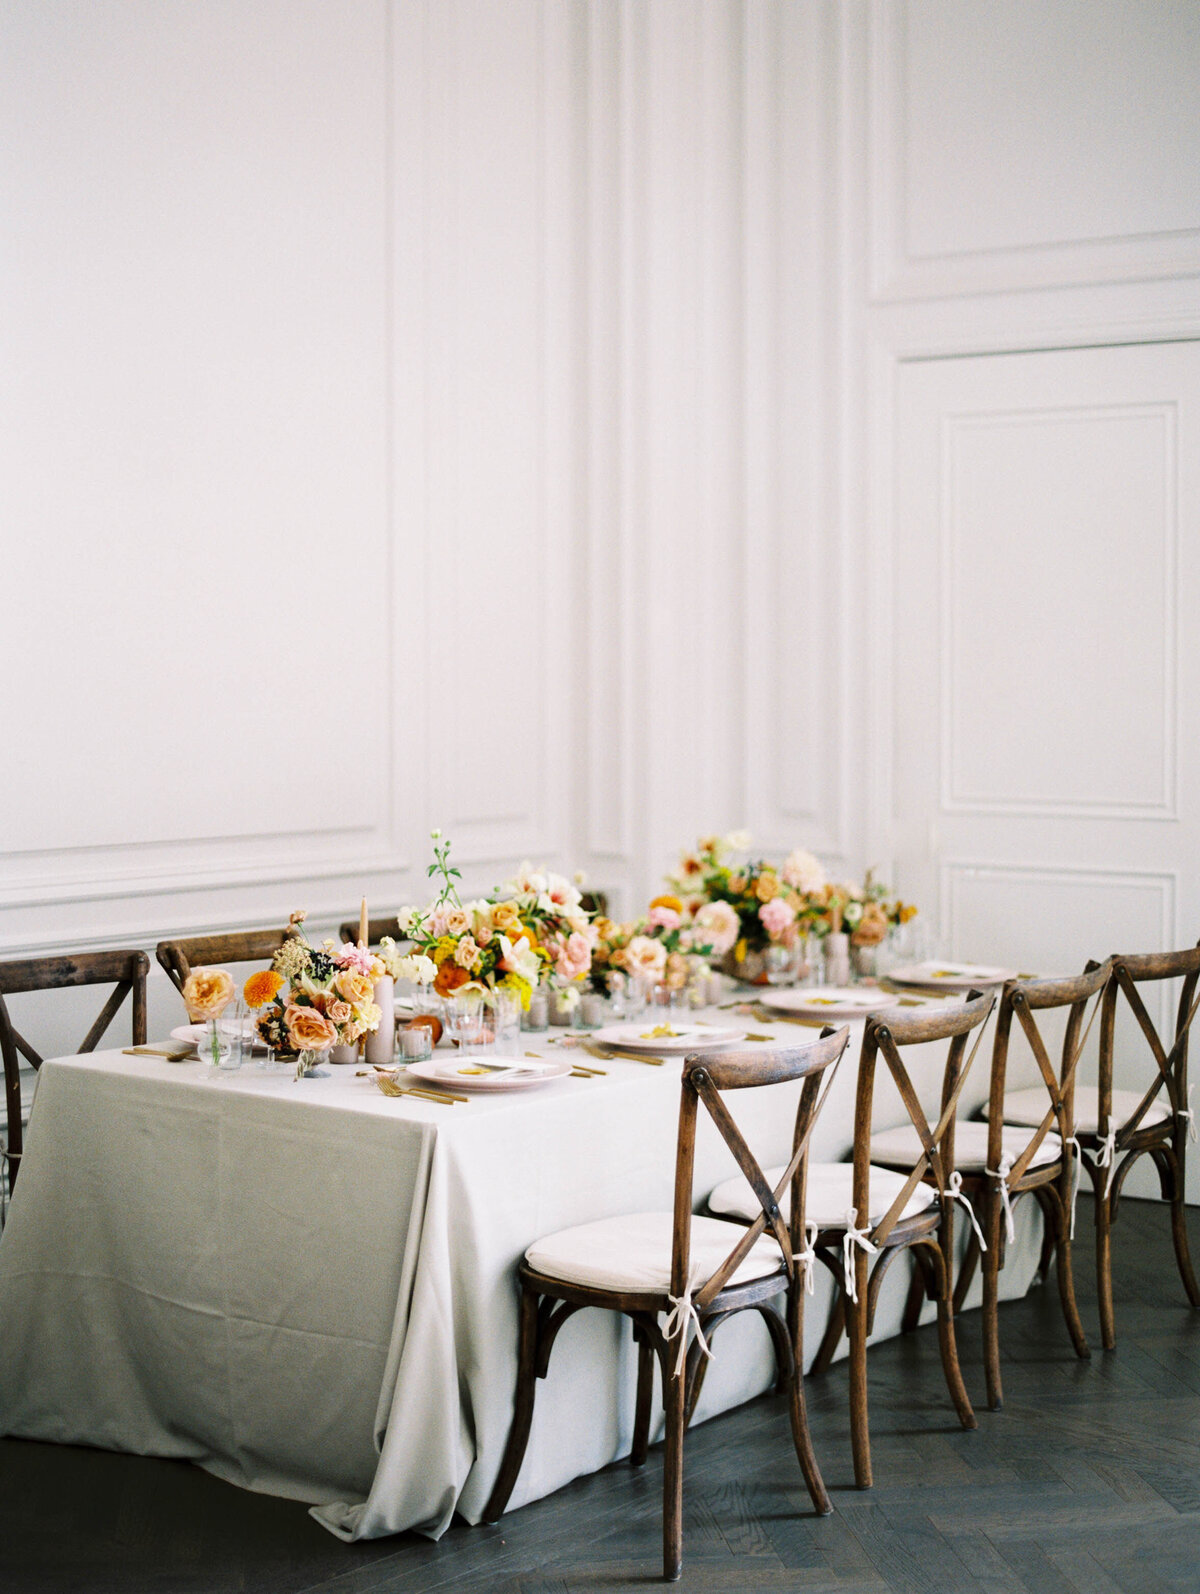 max-owens-design-yellow-wedding-flowers-05-reception-table